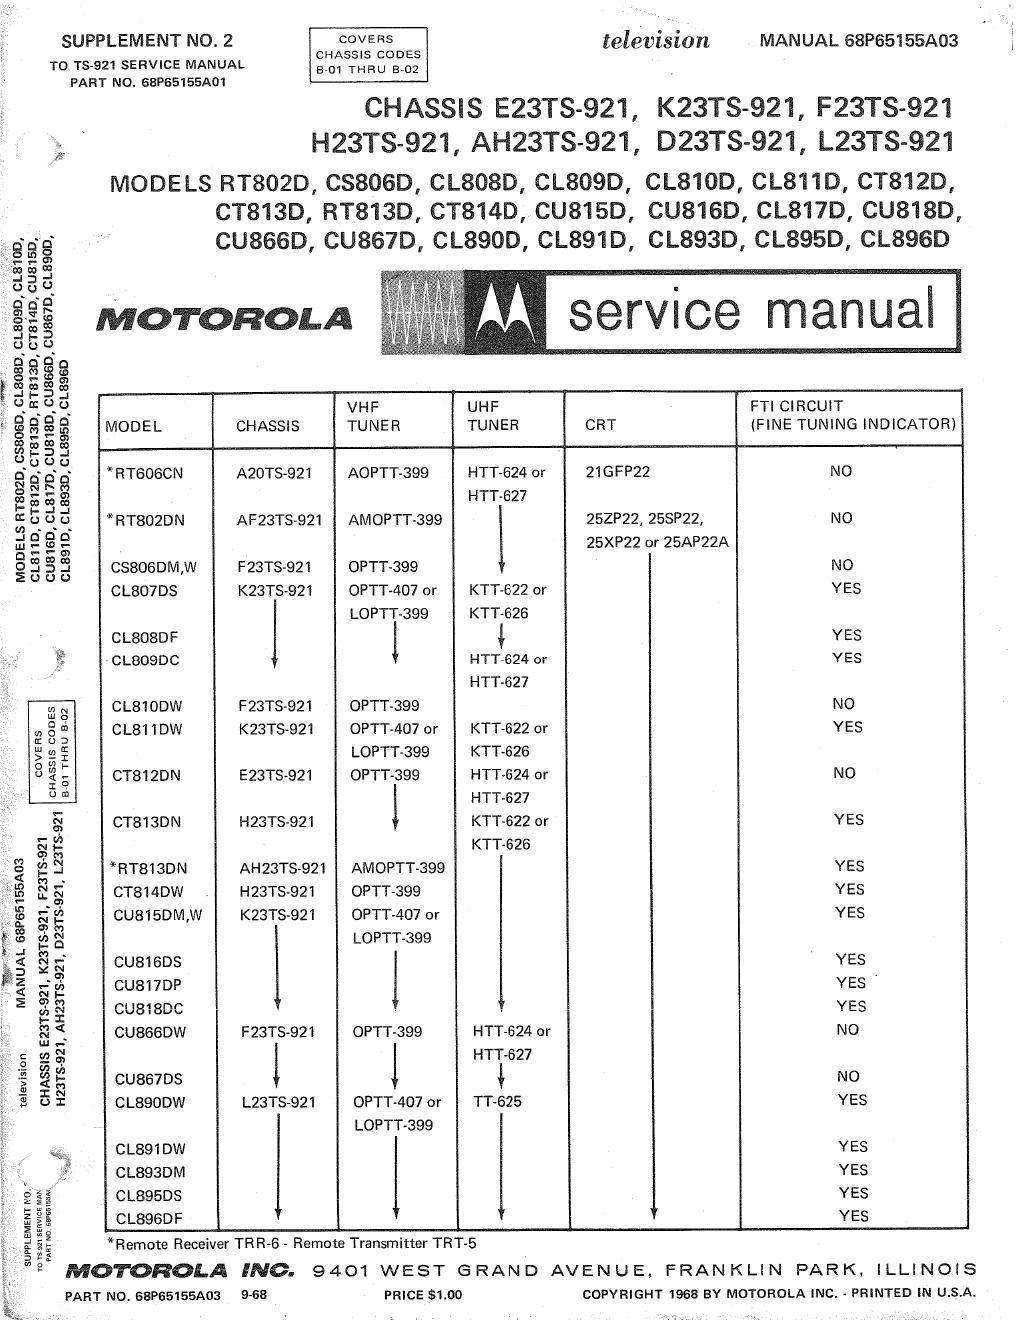 motorola cl 817 d service manual